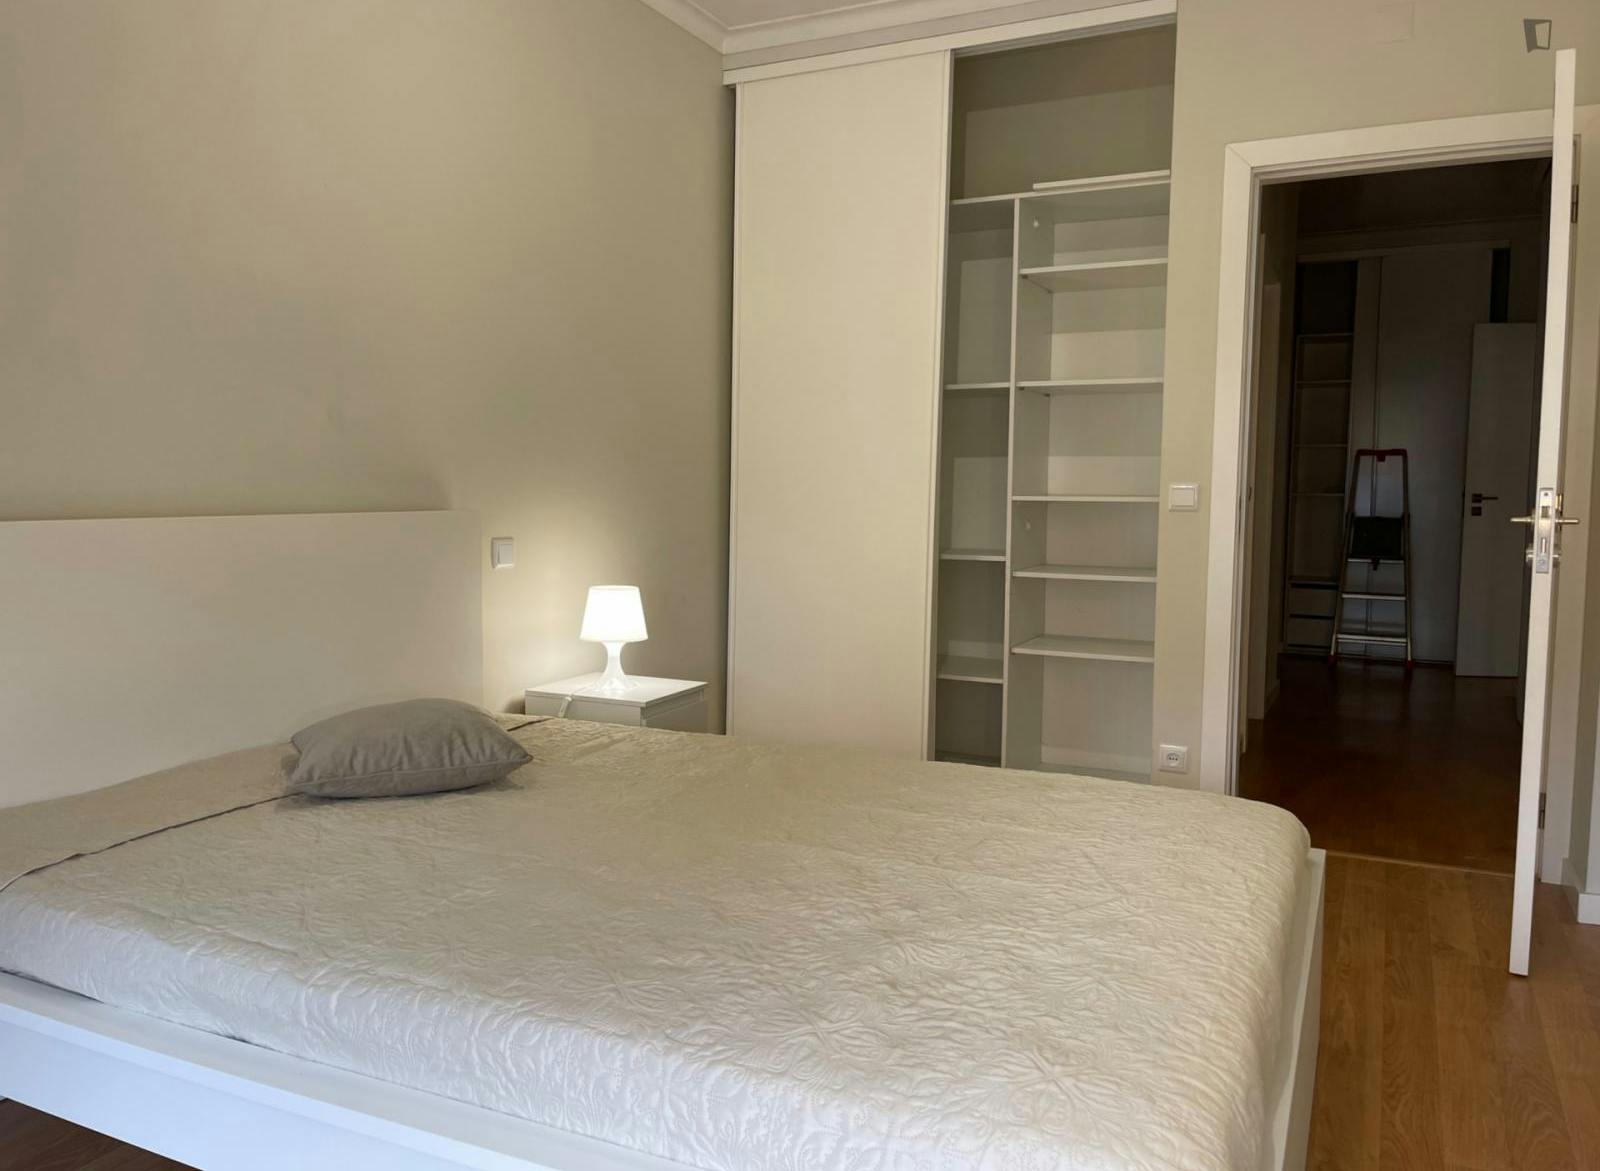 Homely double bedroom near Leiria UNIVERSITY : IPL and ESECS